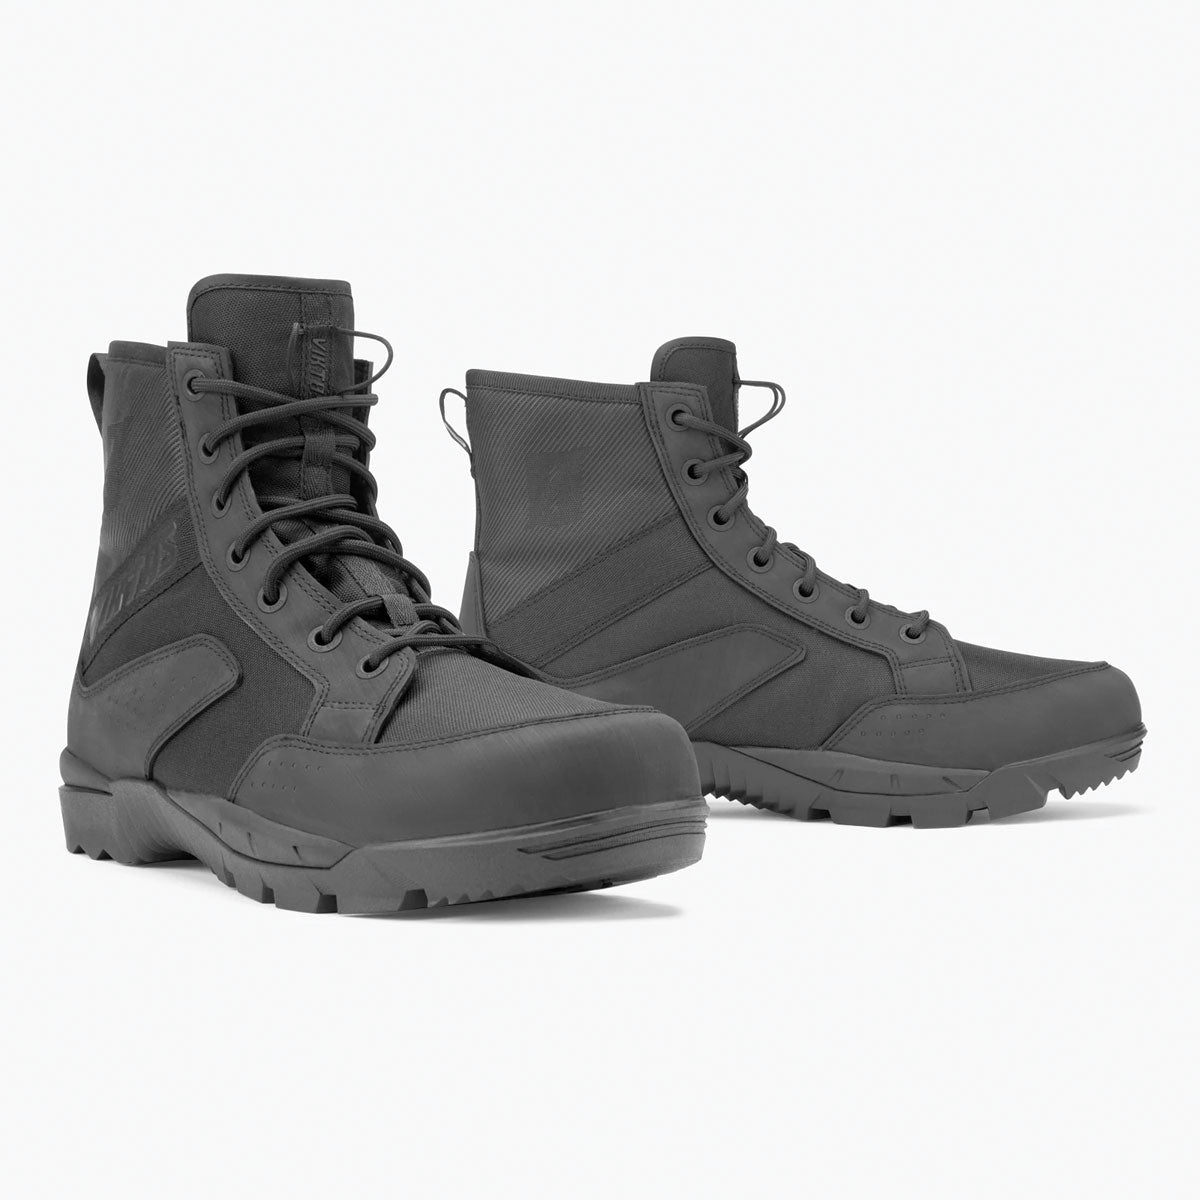 VIKTOS Johnny Combat Winter Boot Black Footwear VIKTOS 6 Tactical Gear Supplier Tactical Distributors Australia